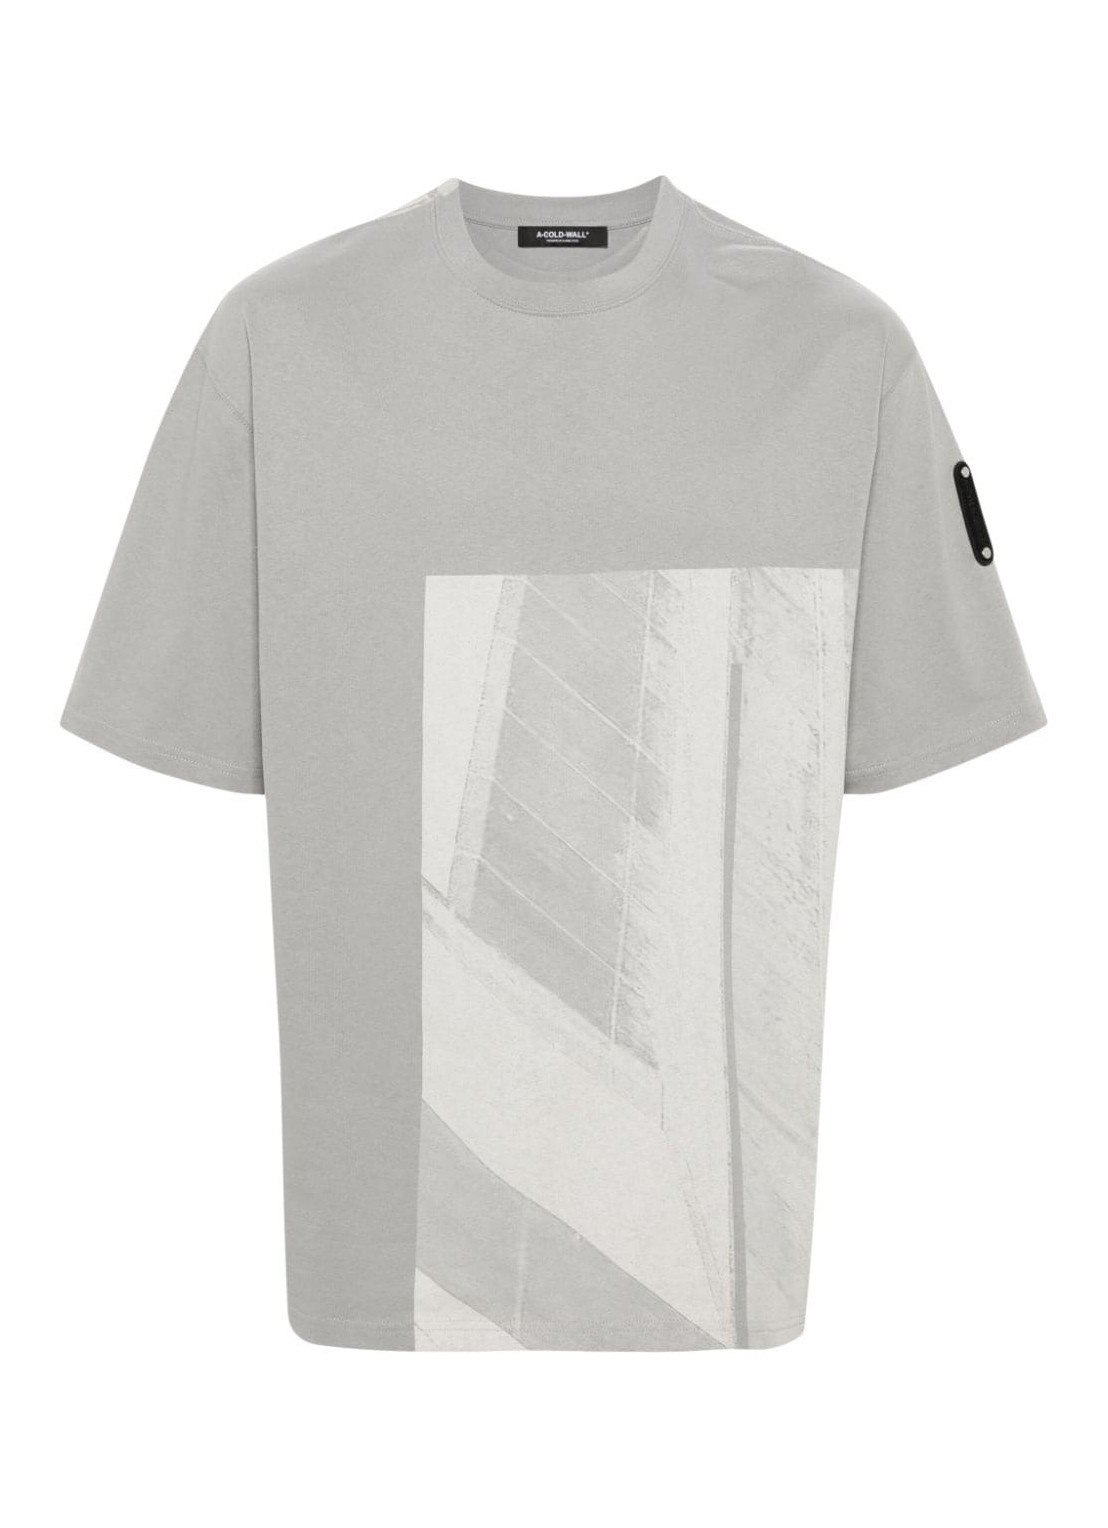 Camiseta a-cold-wall* t-shirt man strand t-shirt acwmts189 cement cemt talla L
 